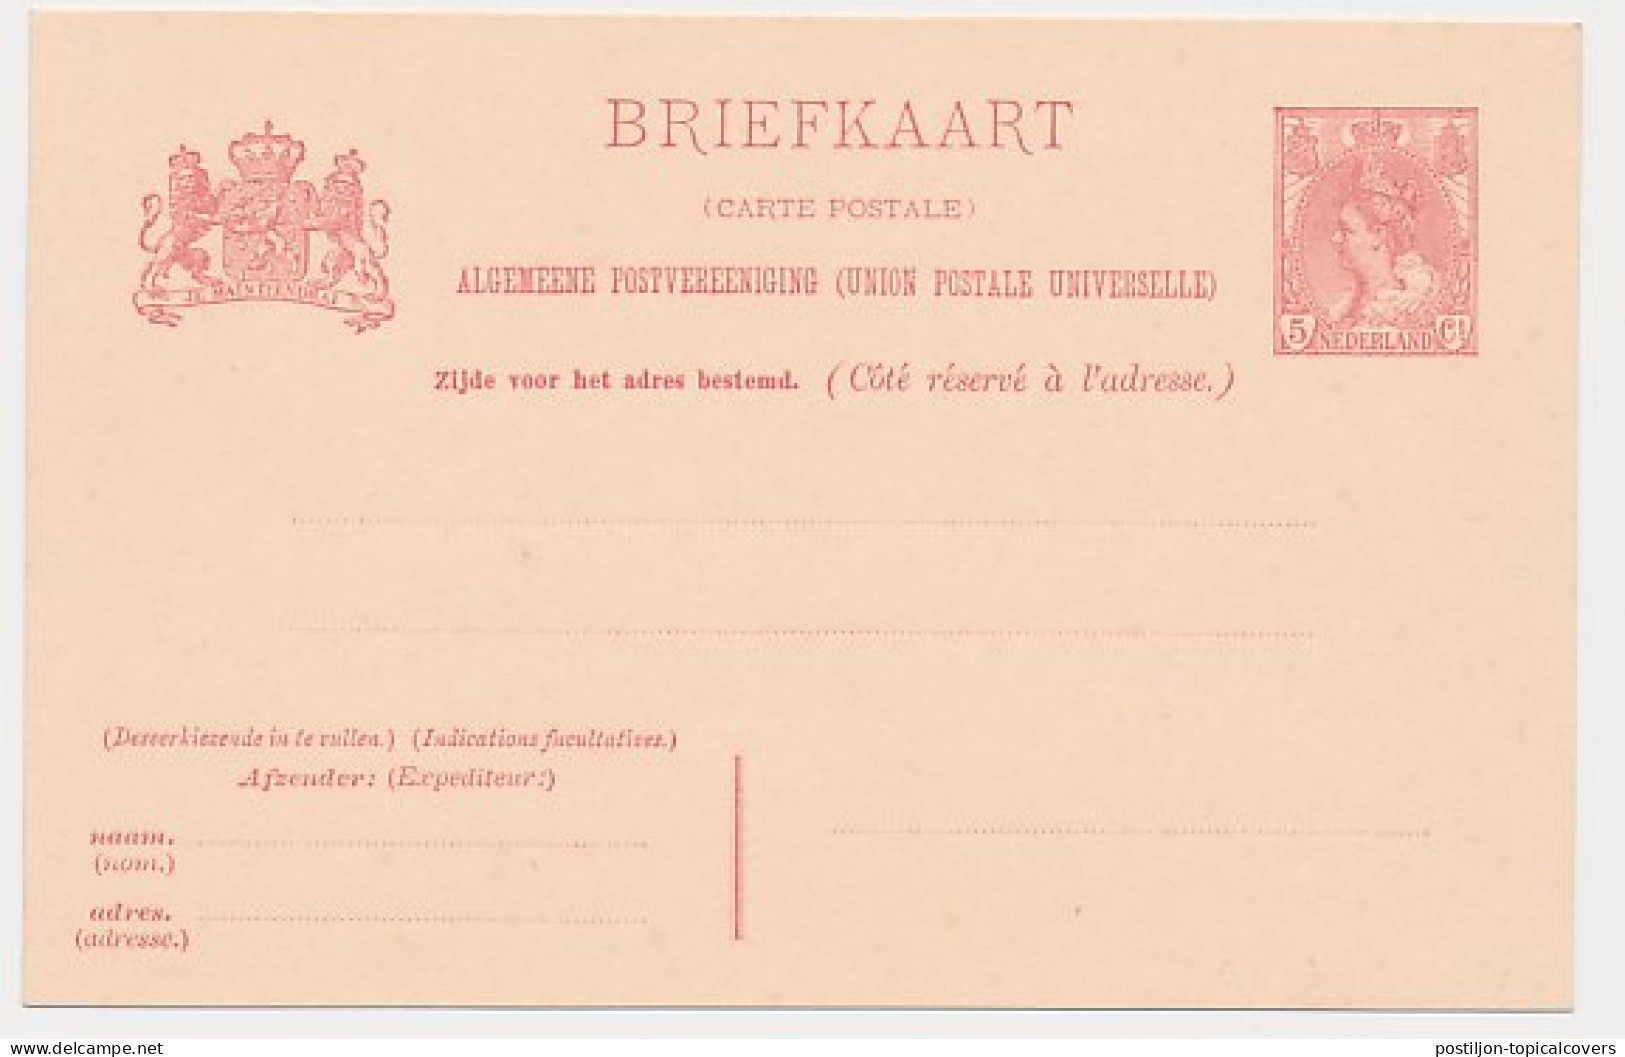 Briefkaart G. 61 - Accent Op Expediteur Ontbreekt - Interi Postali